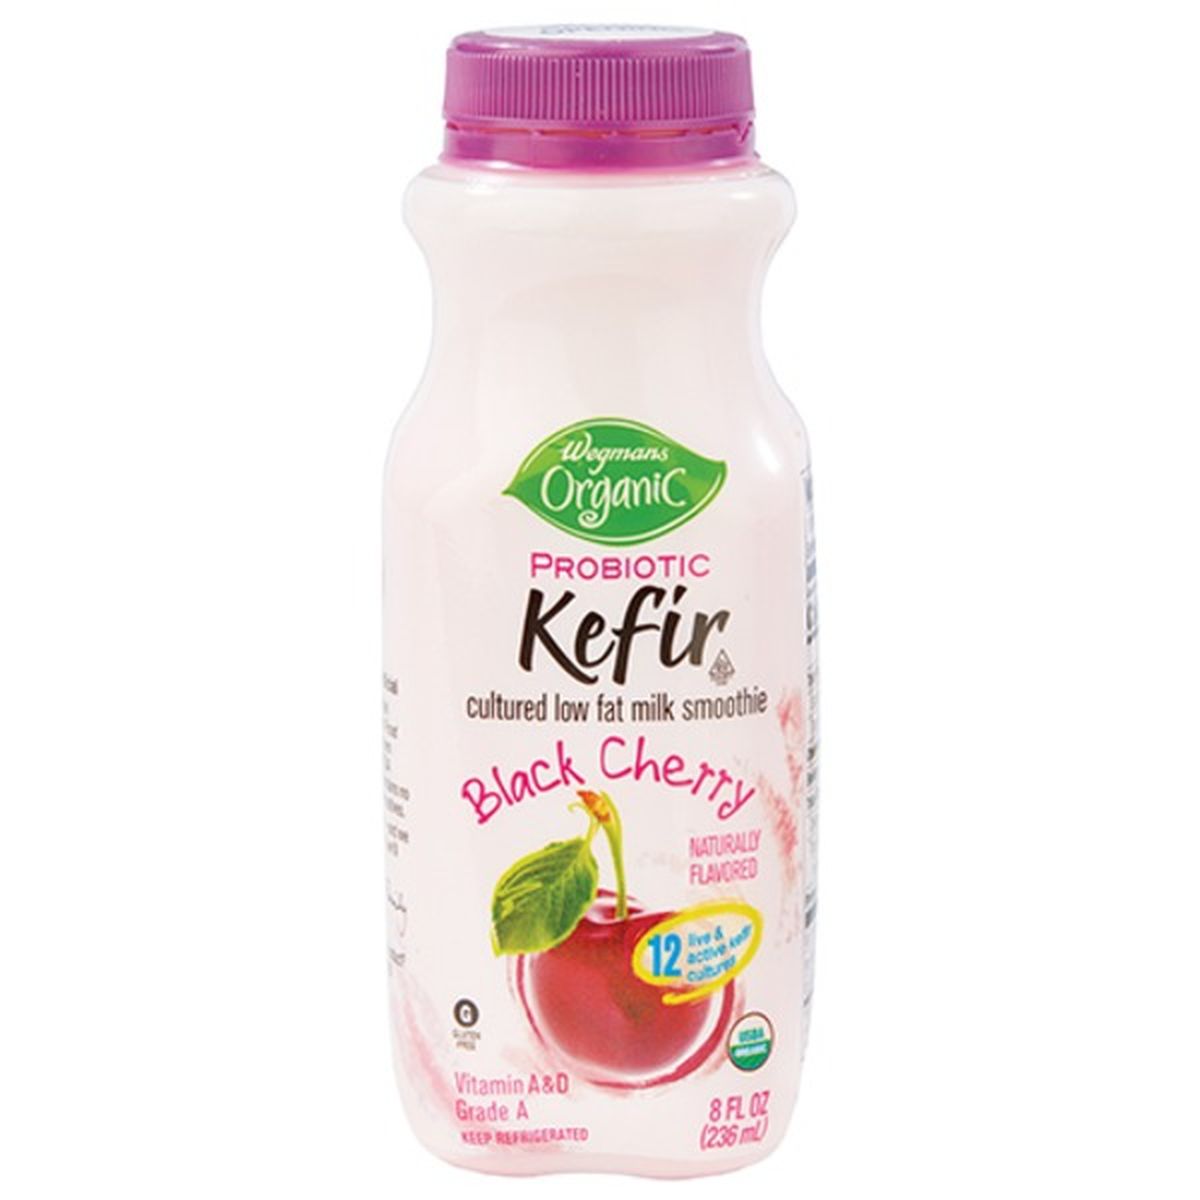 Calories in Wegmans Organic Black Cherry Probiotic Kefir